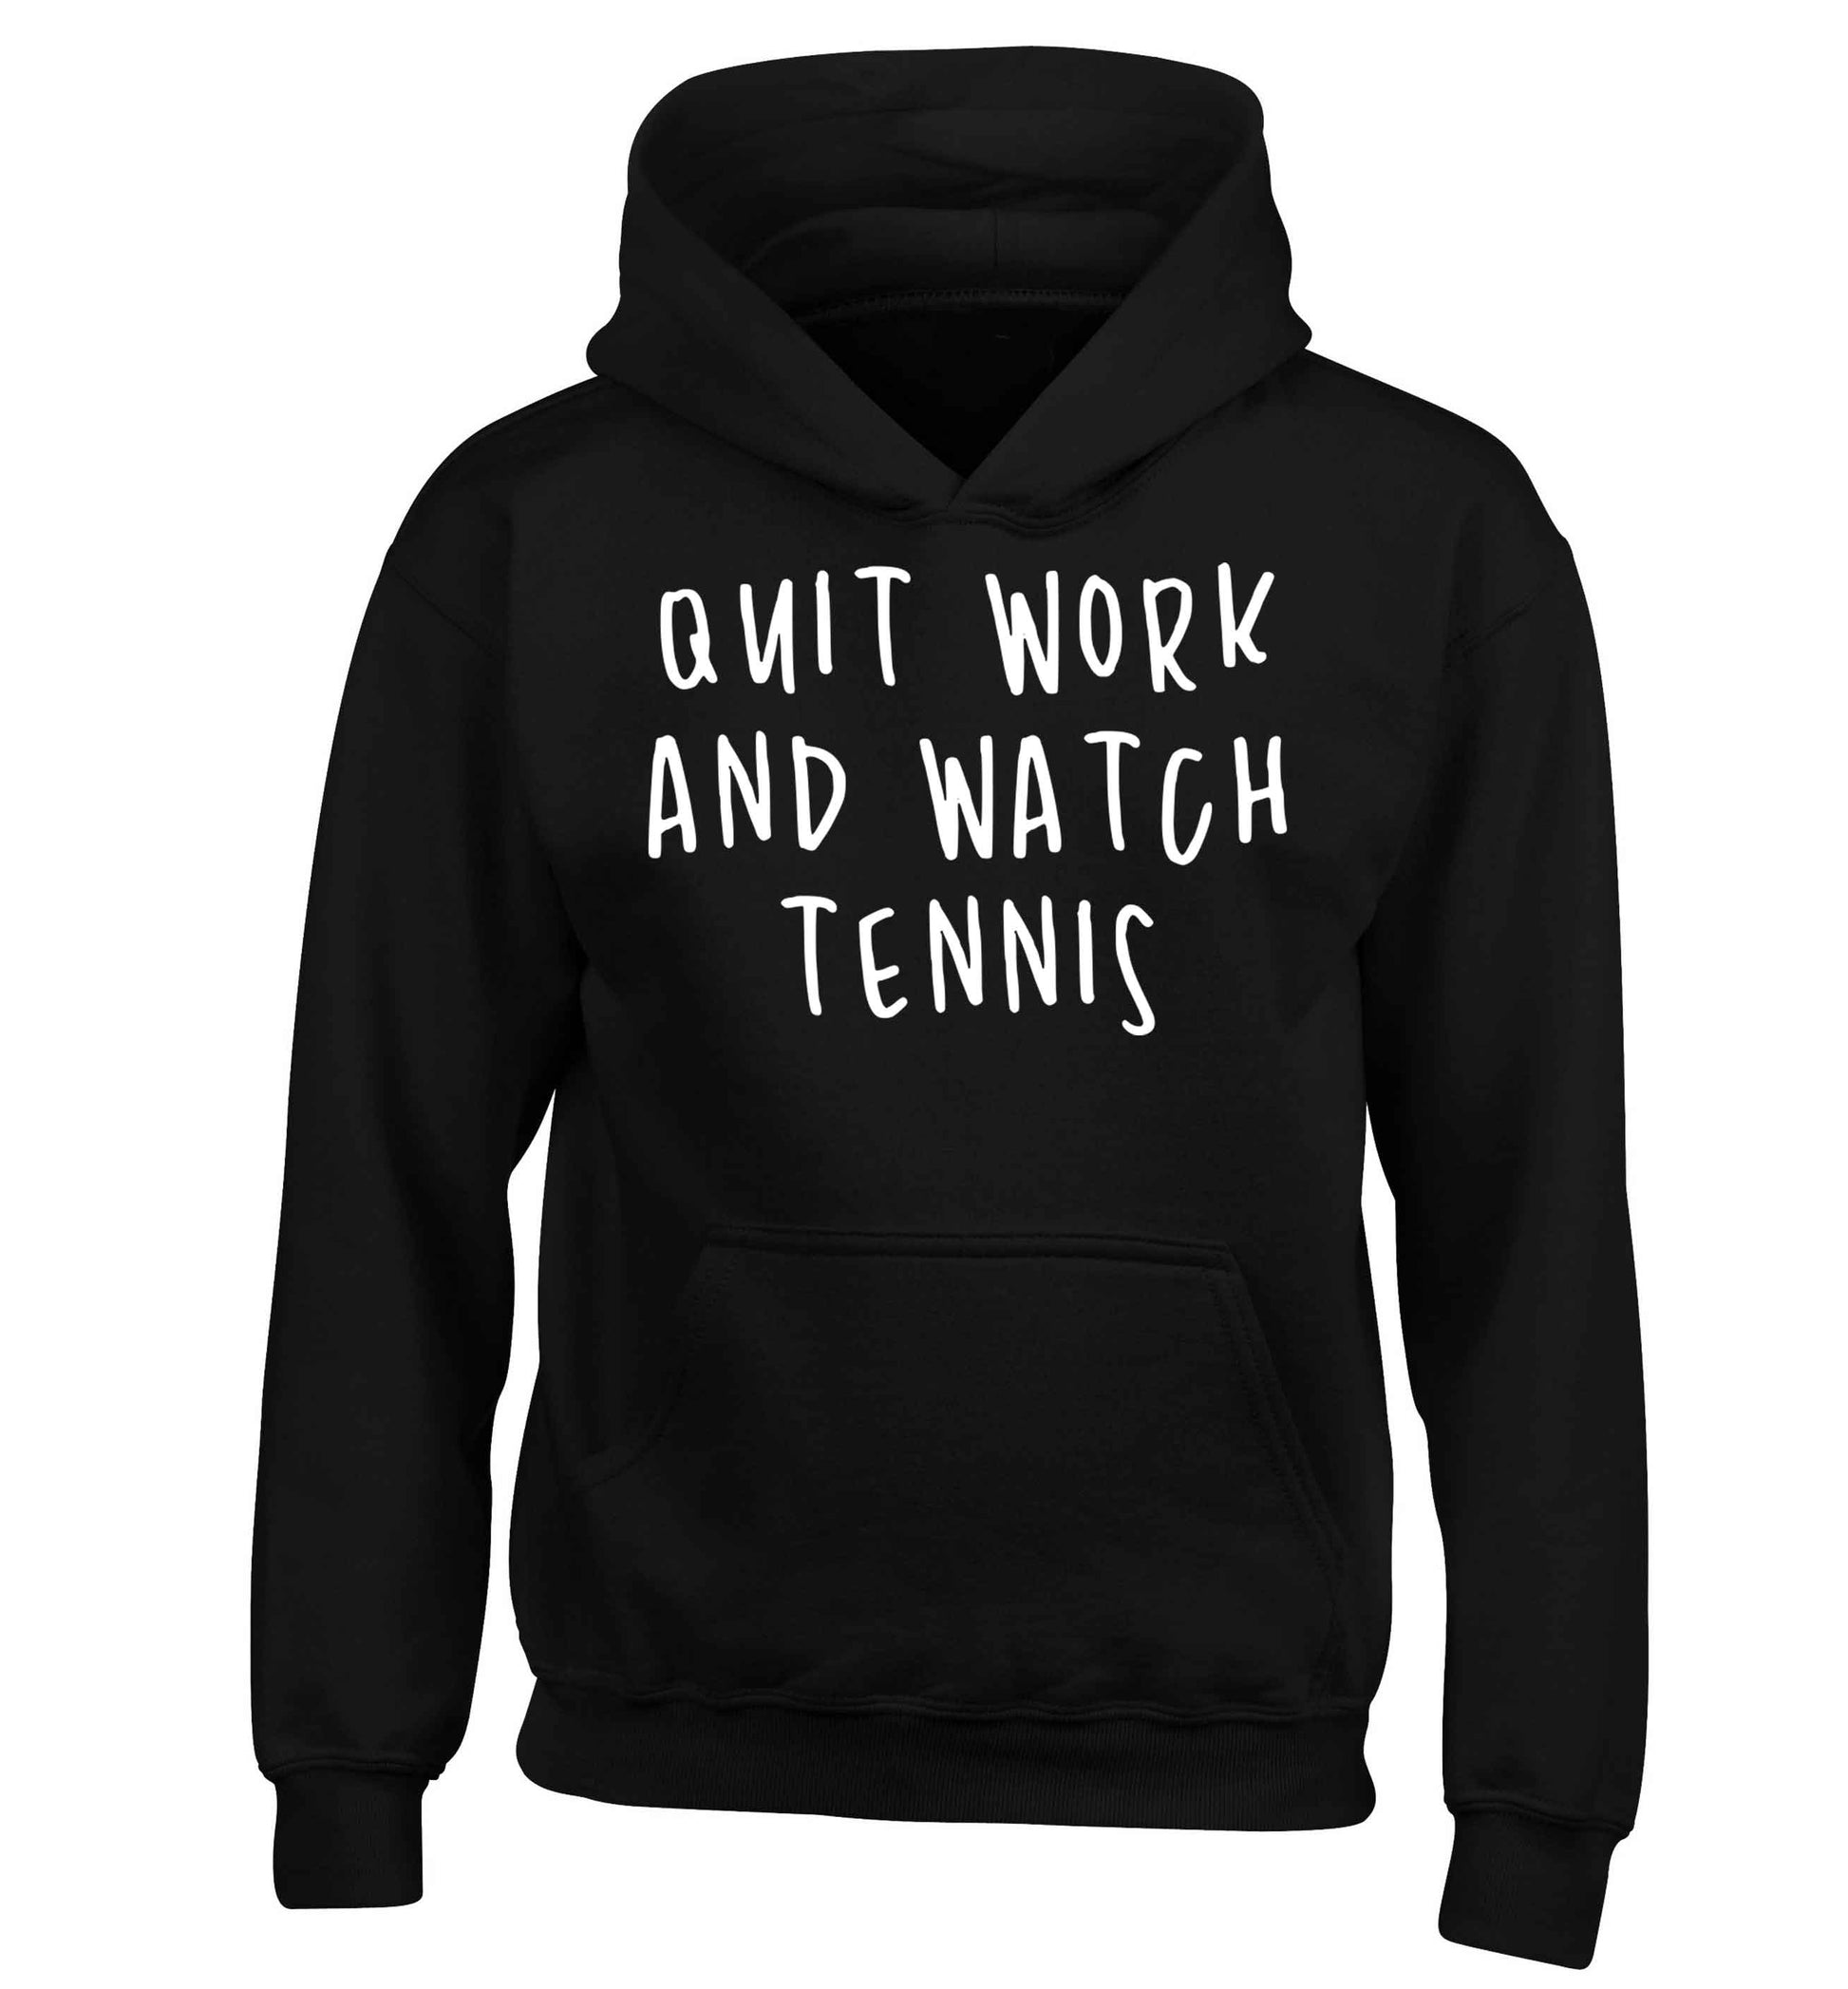 Quit work and watch tennis children's black hoodie 12-13 Years